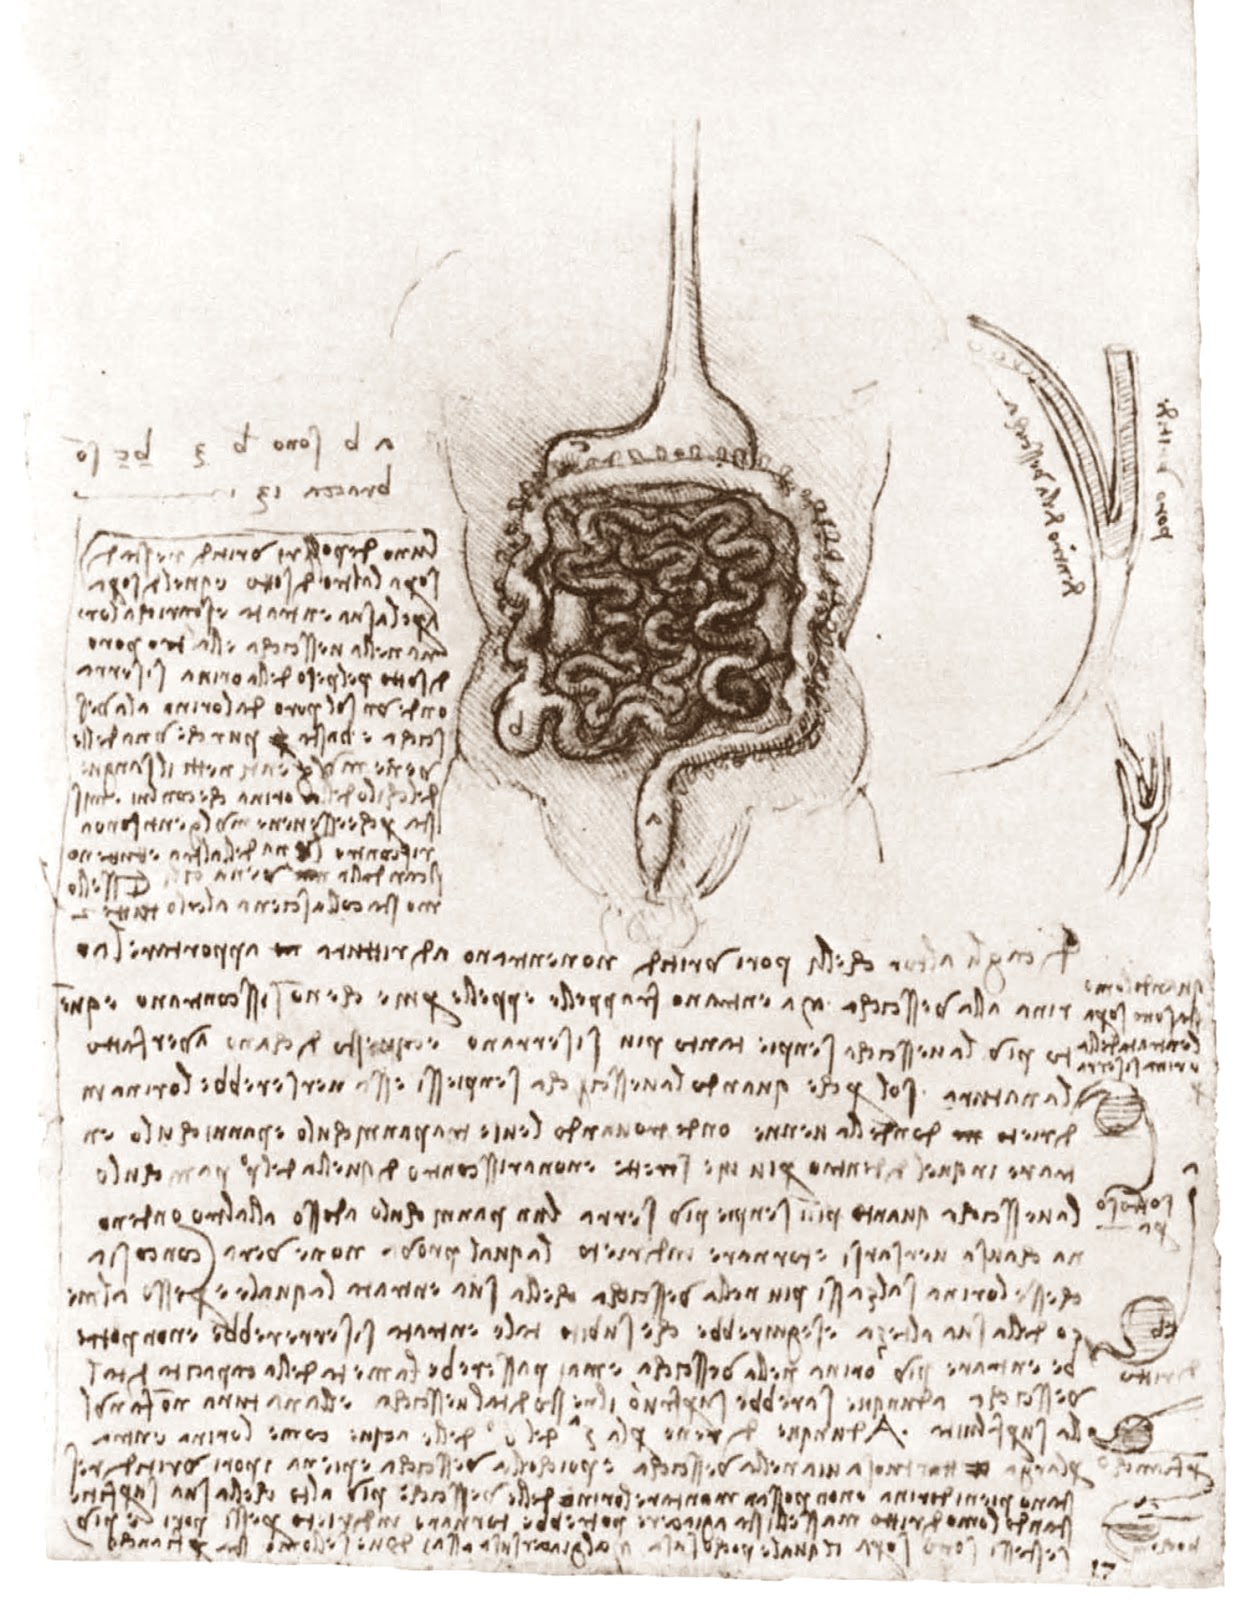 Leonardo+da+Vinci-1452-1519 (766).jpg